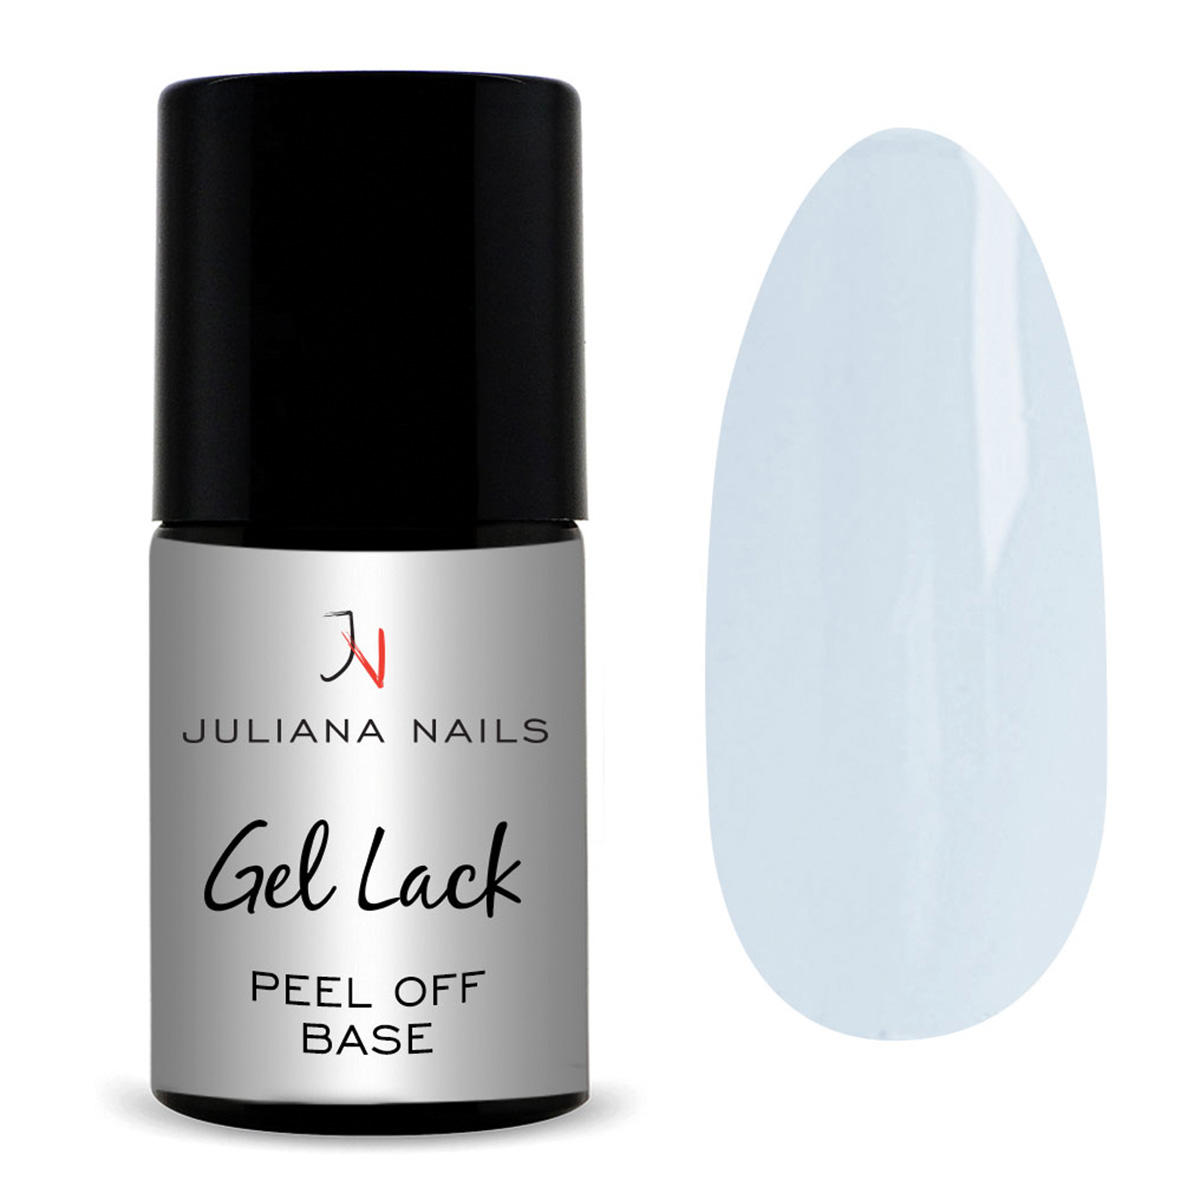 Juliana Nails Gel Lack Peel Off Base 6 ml - 1